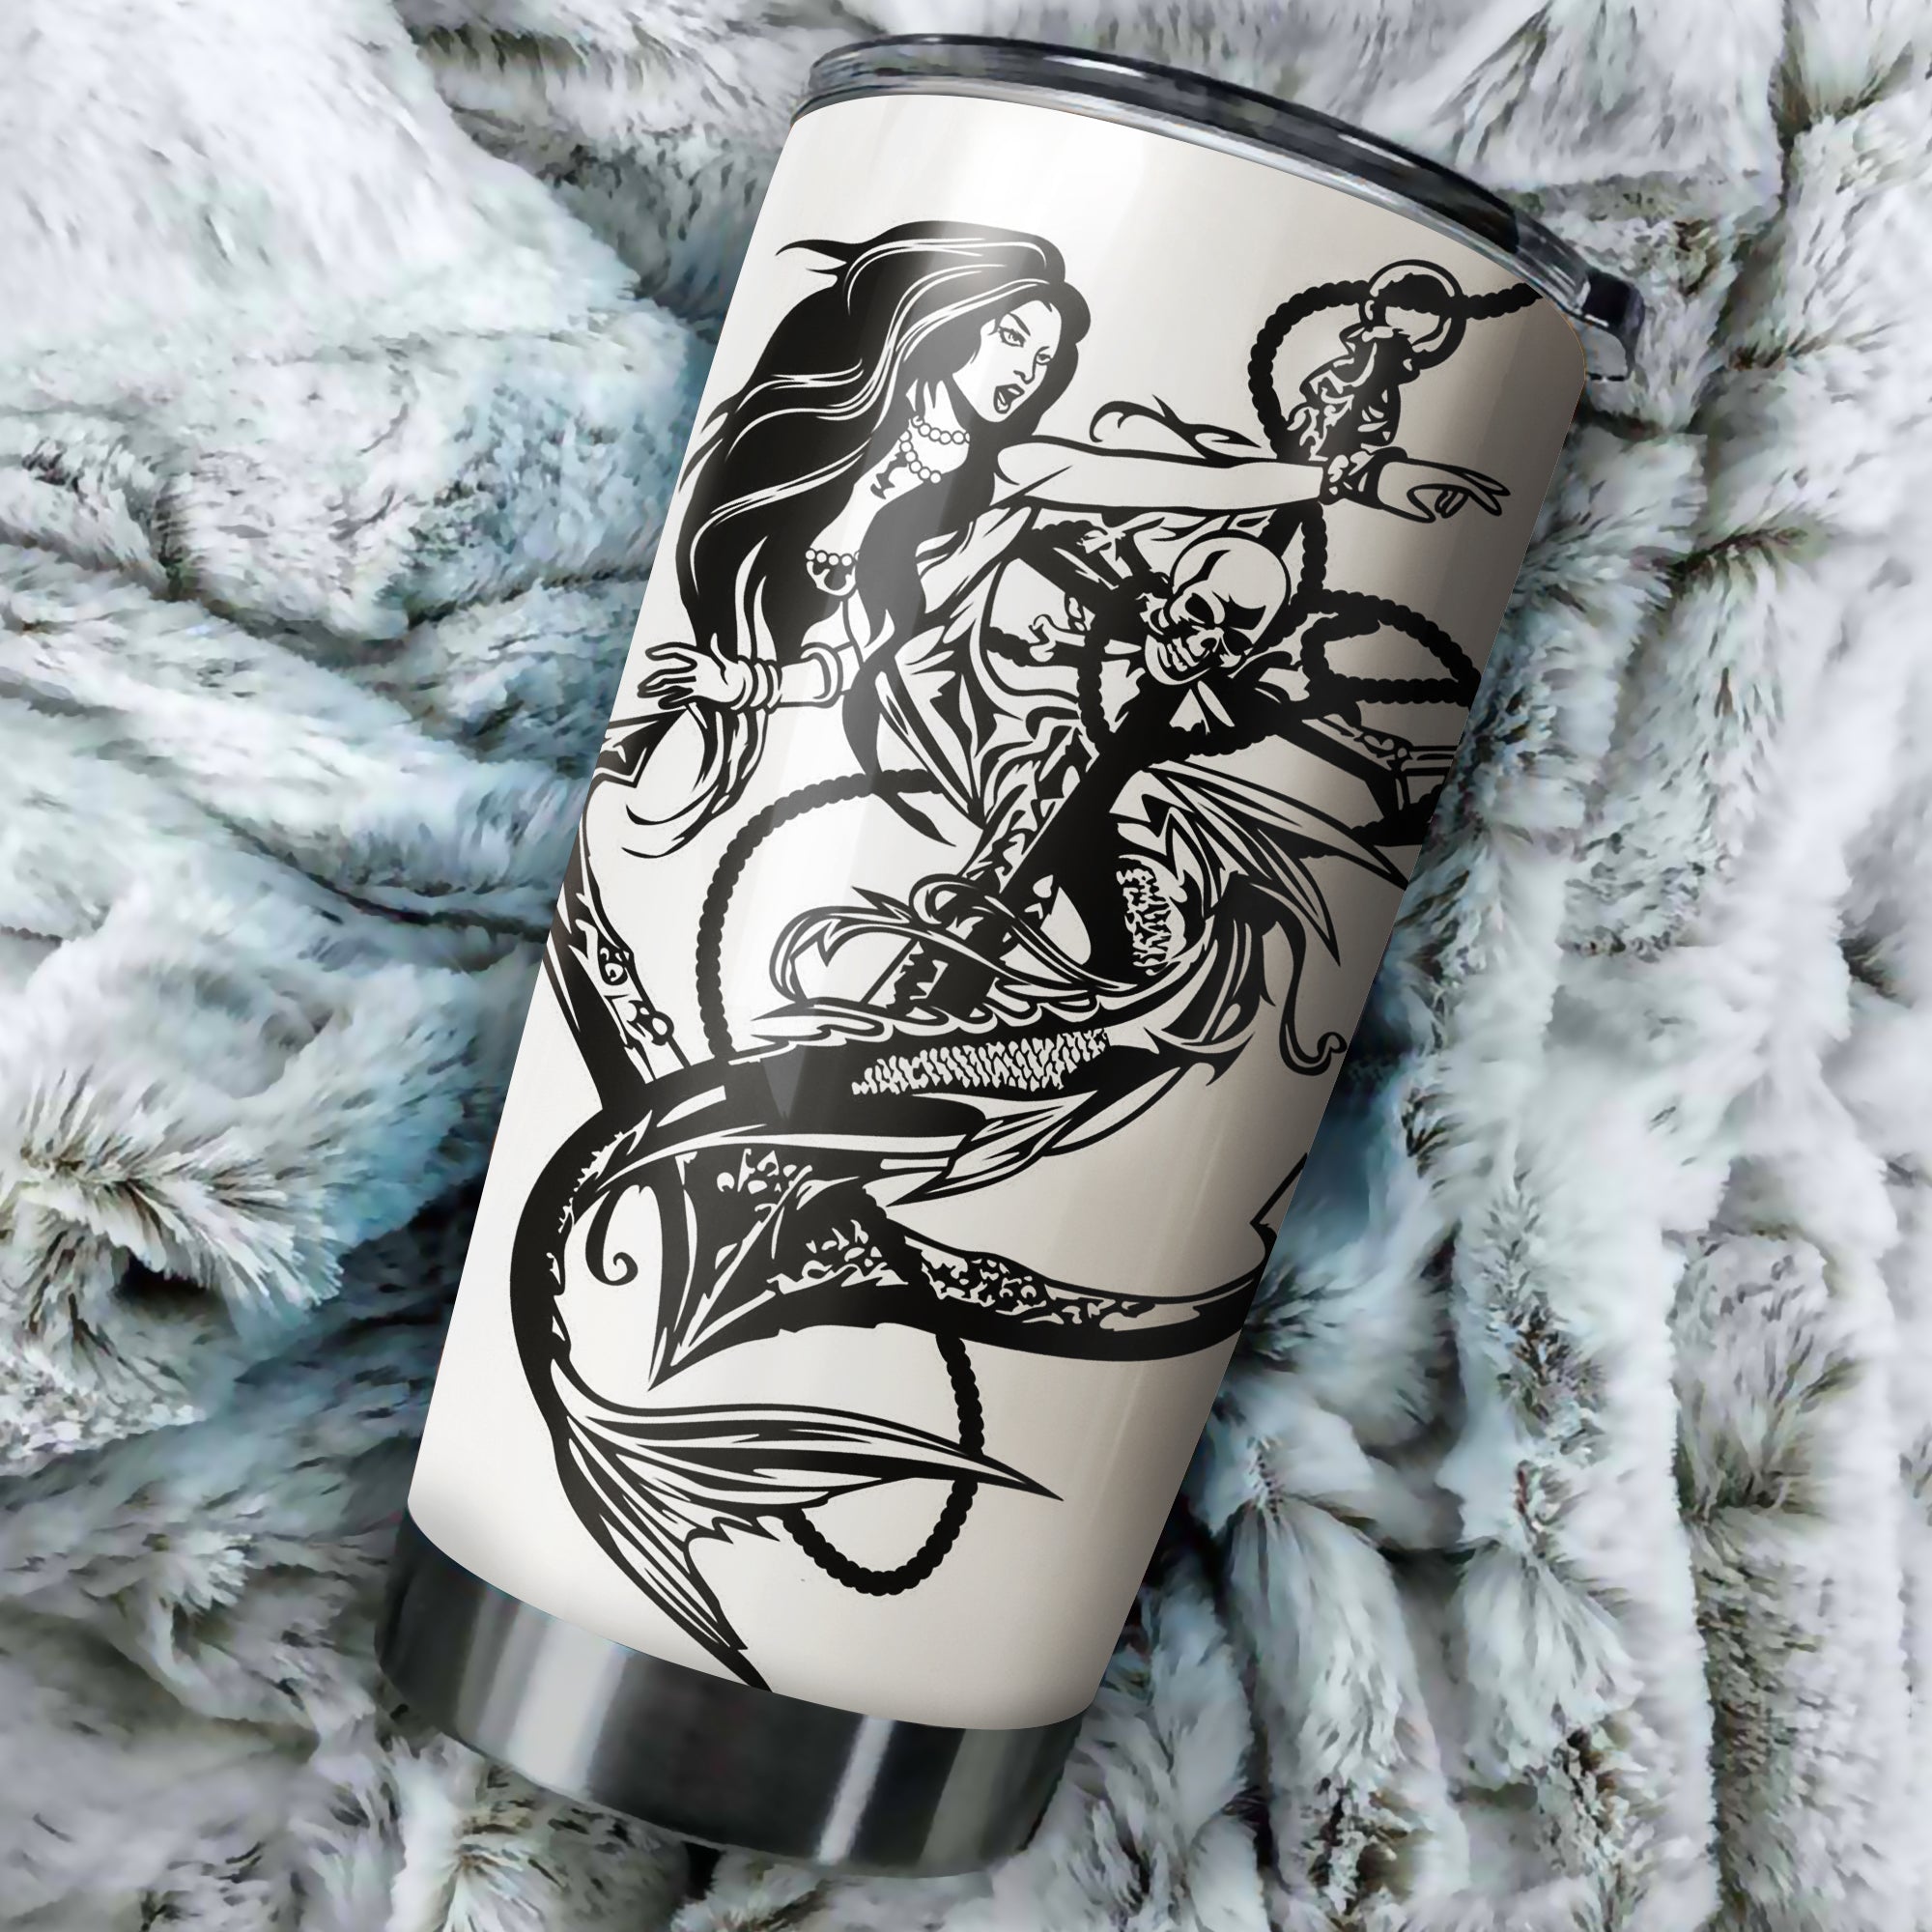 Mermaid with anchors in Mythology Tumbler 06081